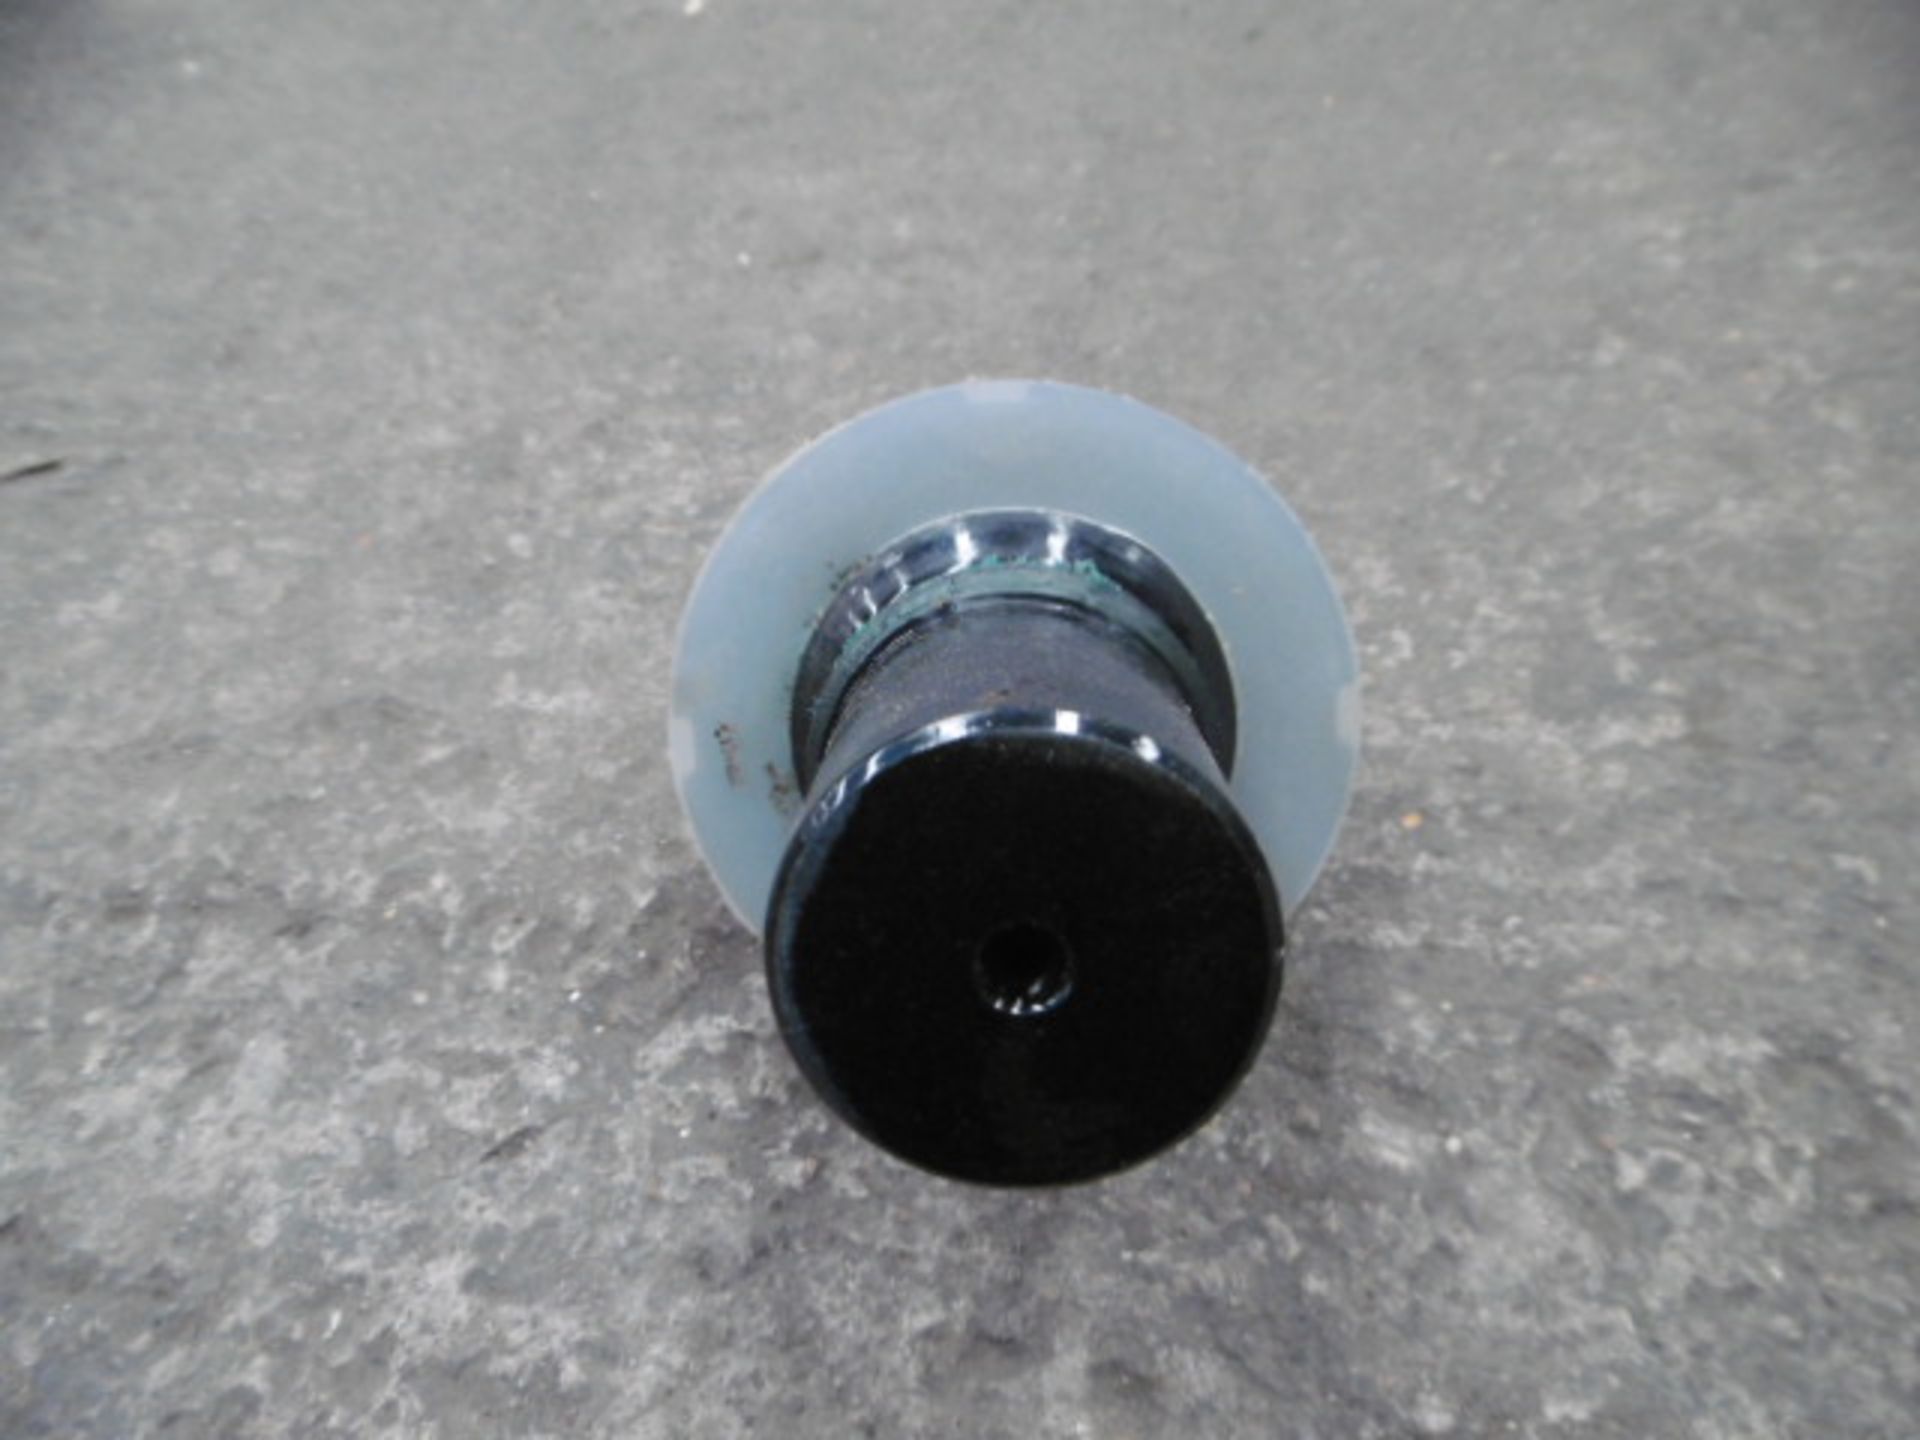 12 x No. 59 A/C Bomb Nose Plugs - Image 5 of 8